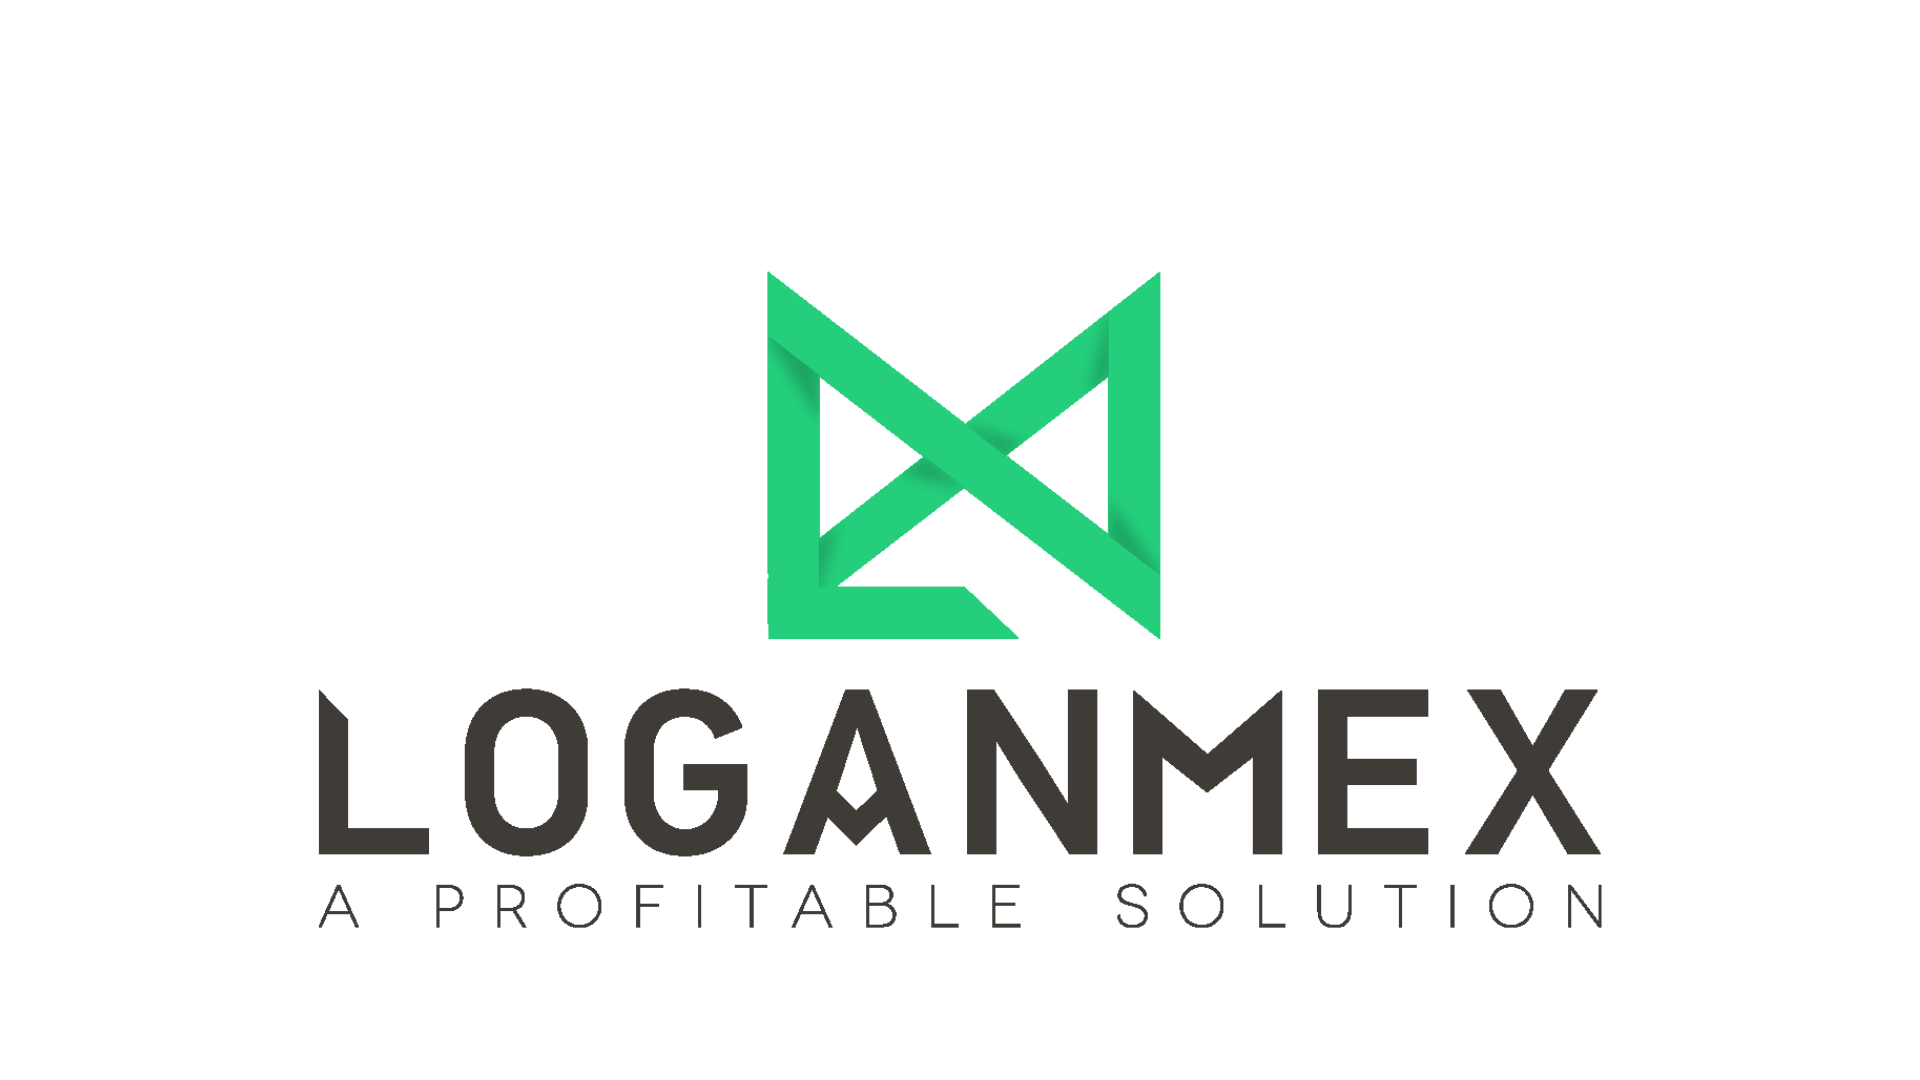 Loganmex